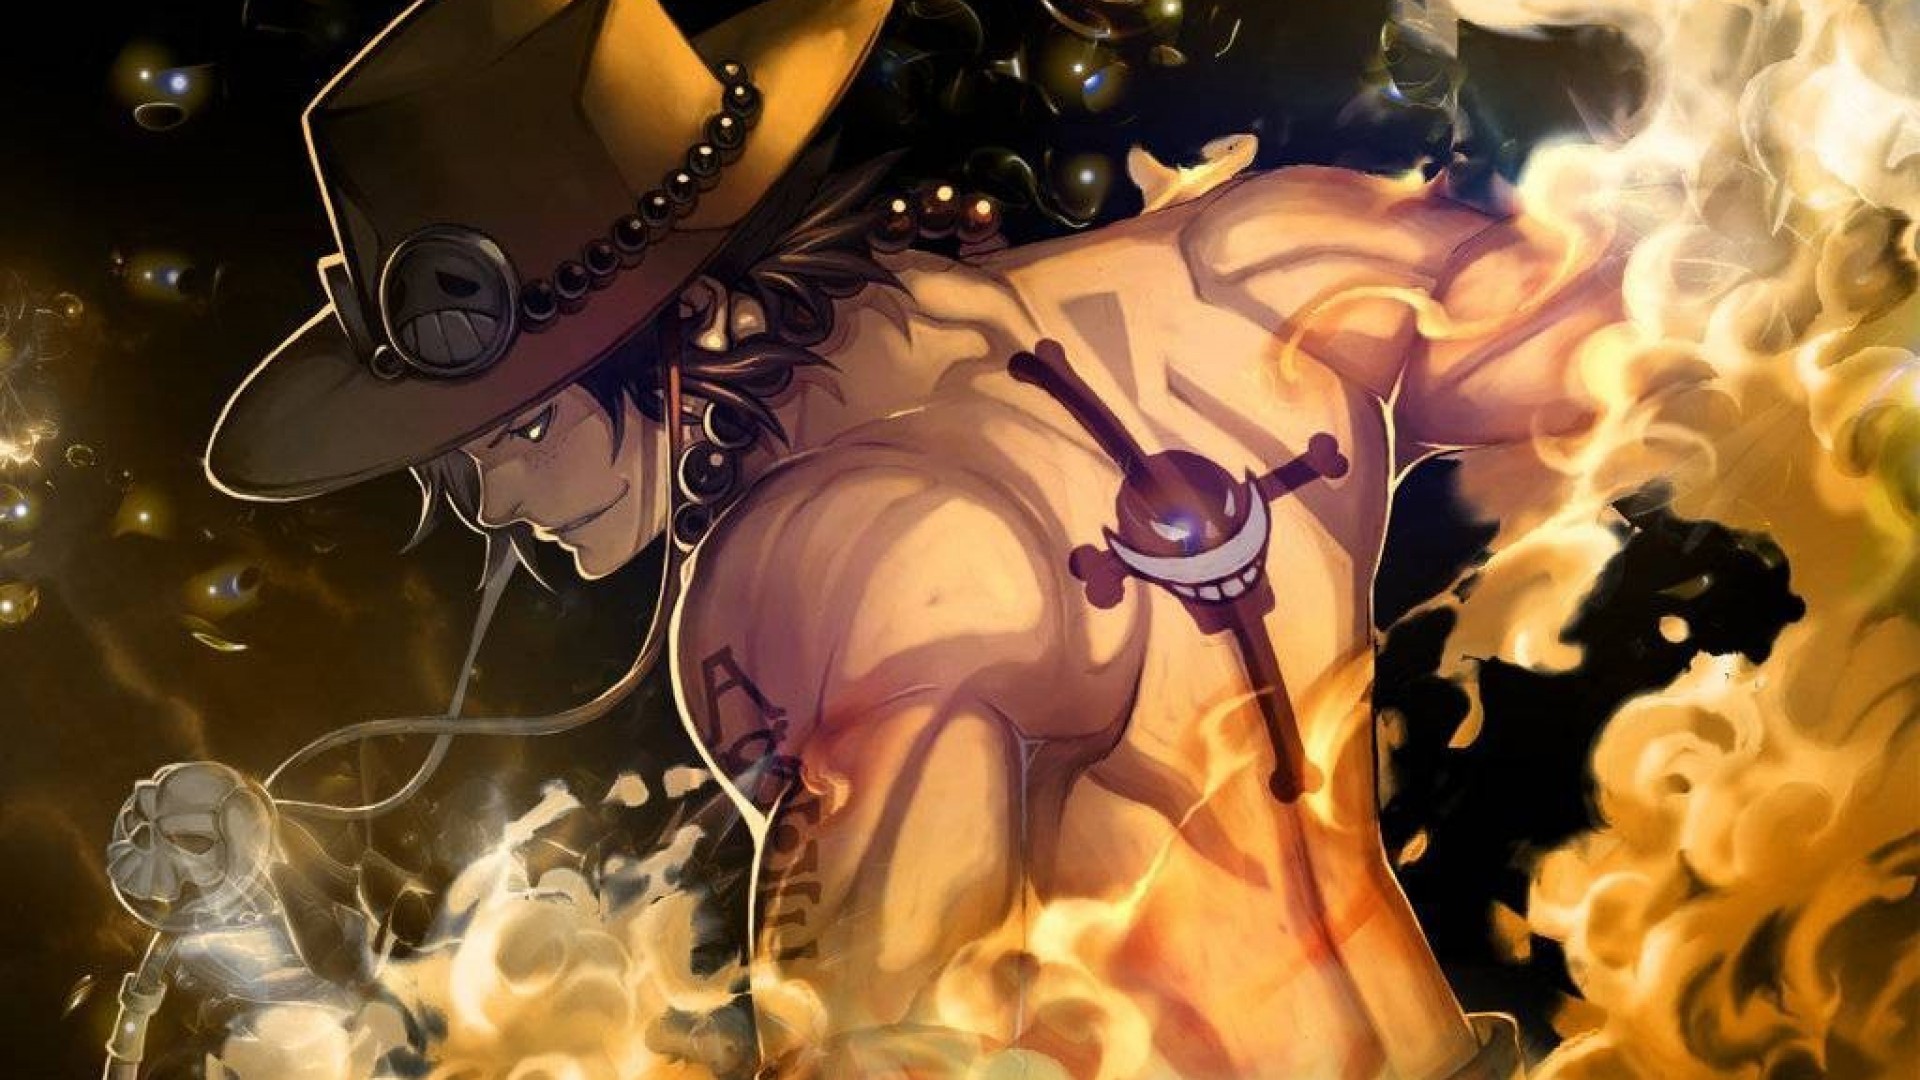  One  Piece  wallpaper  HD    Download free stunning High 